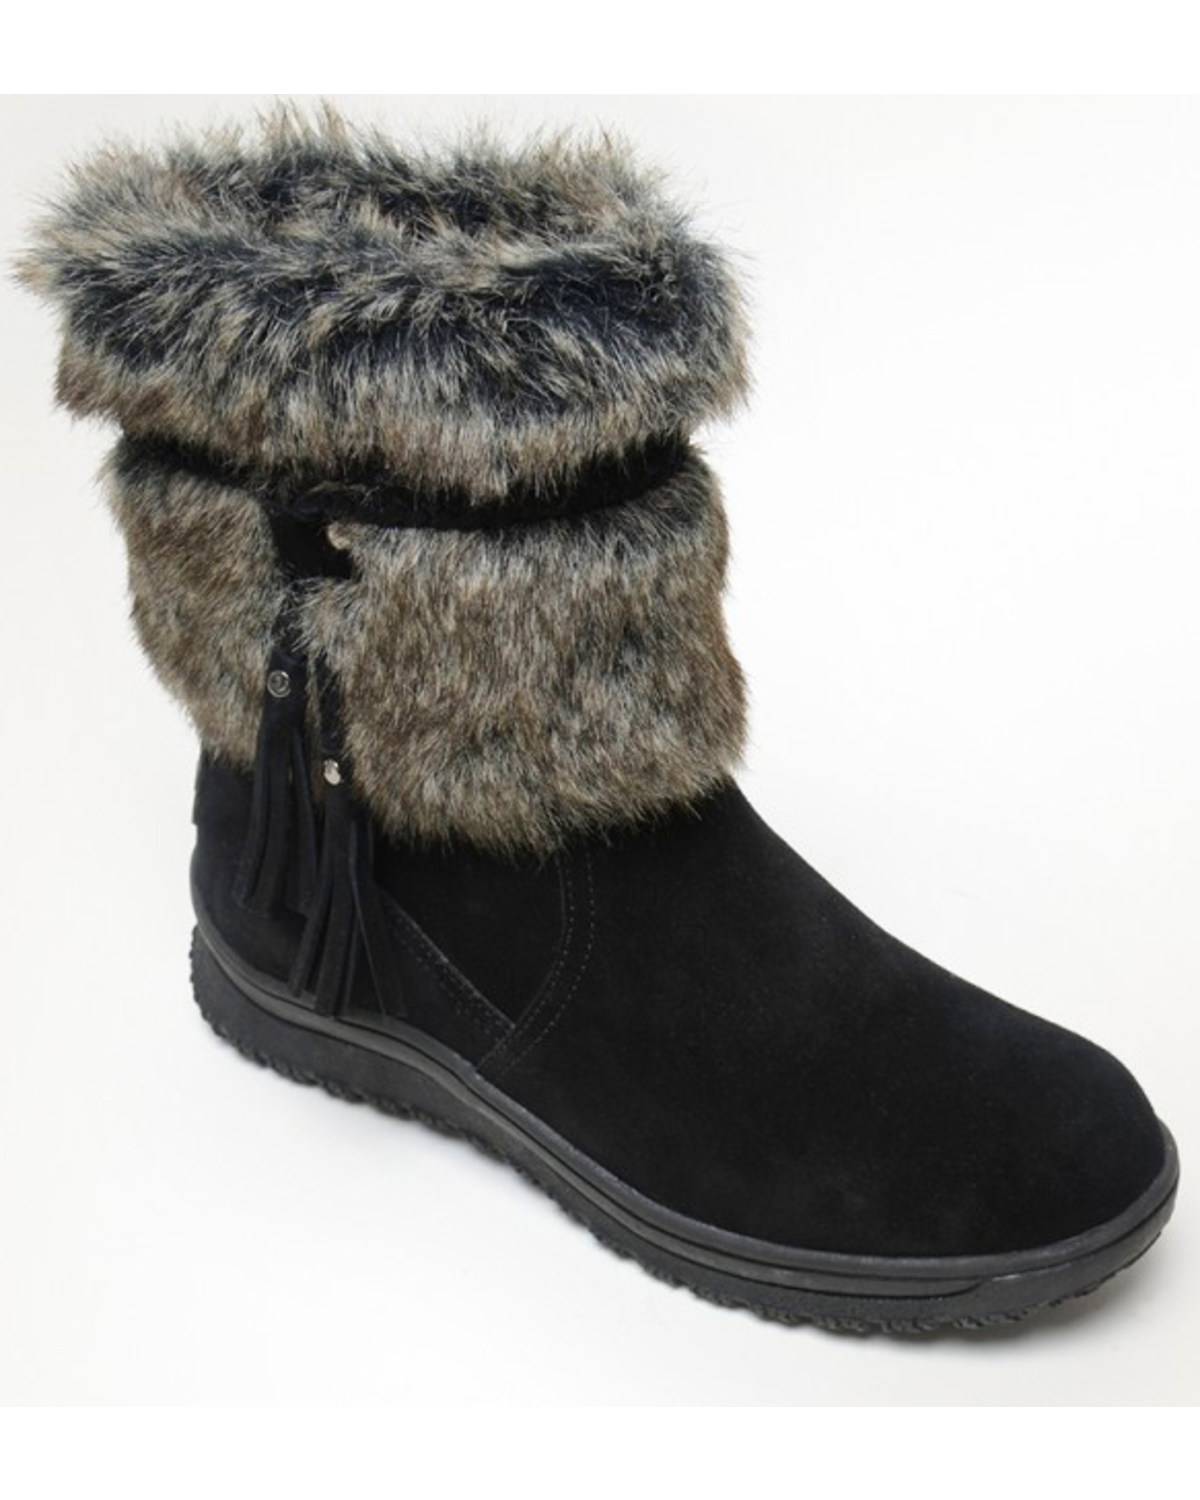 Minnetonka Women's Everett Suede Fur Boots - Round Toe